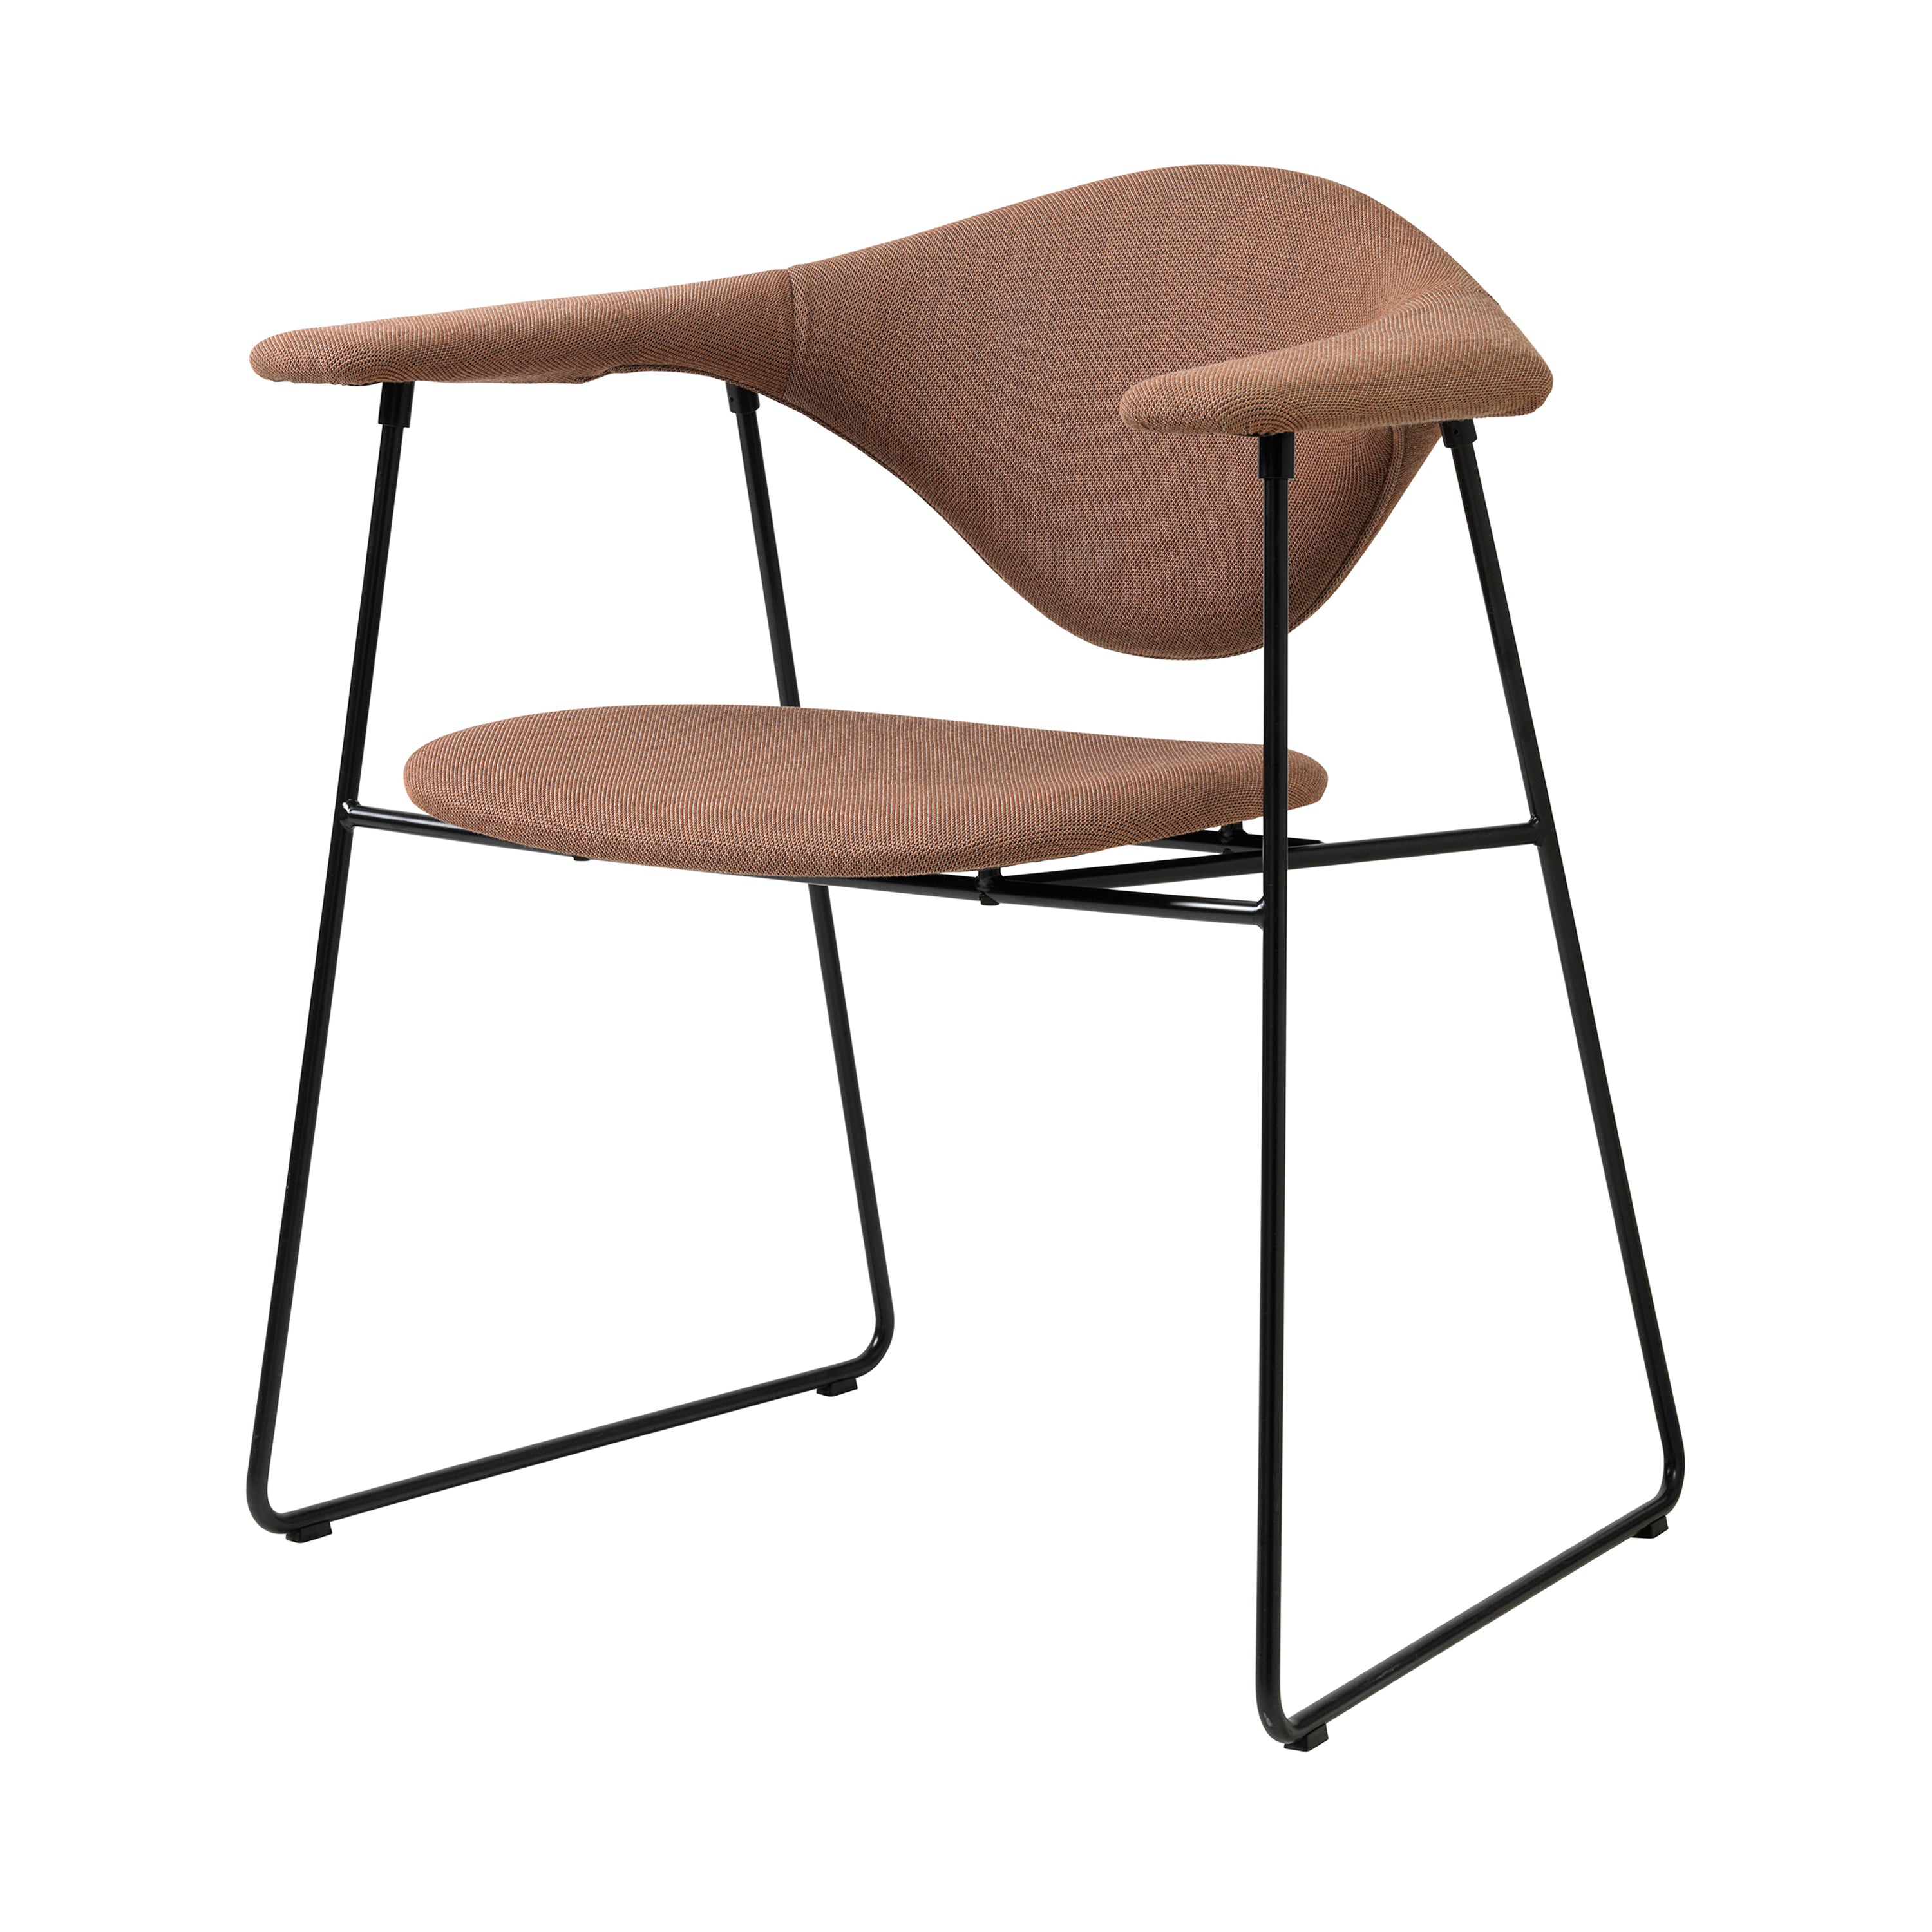 Masculo Dining Chair: Sledge Base + Black Semi Matt